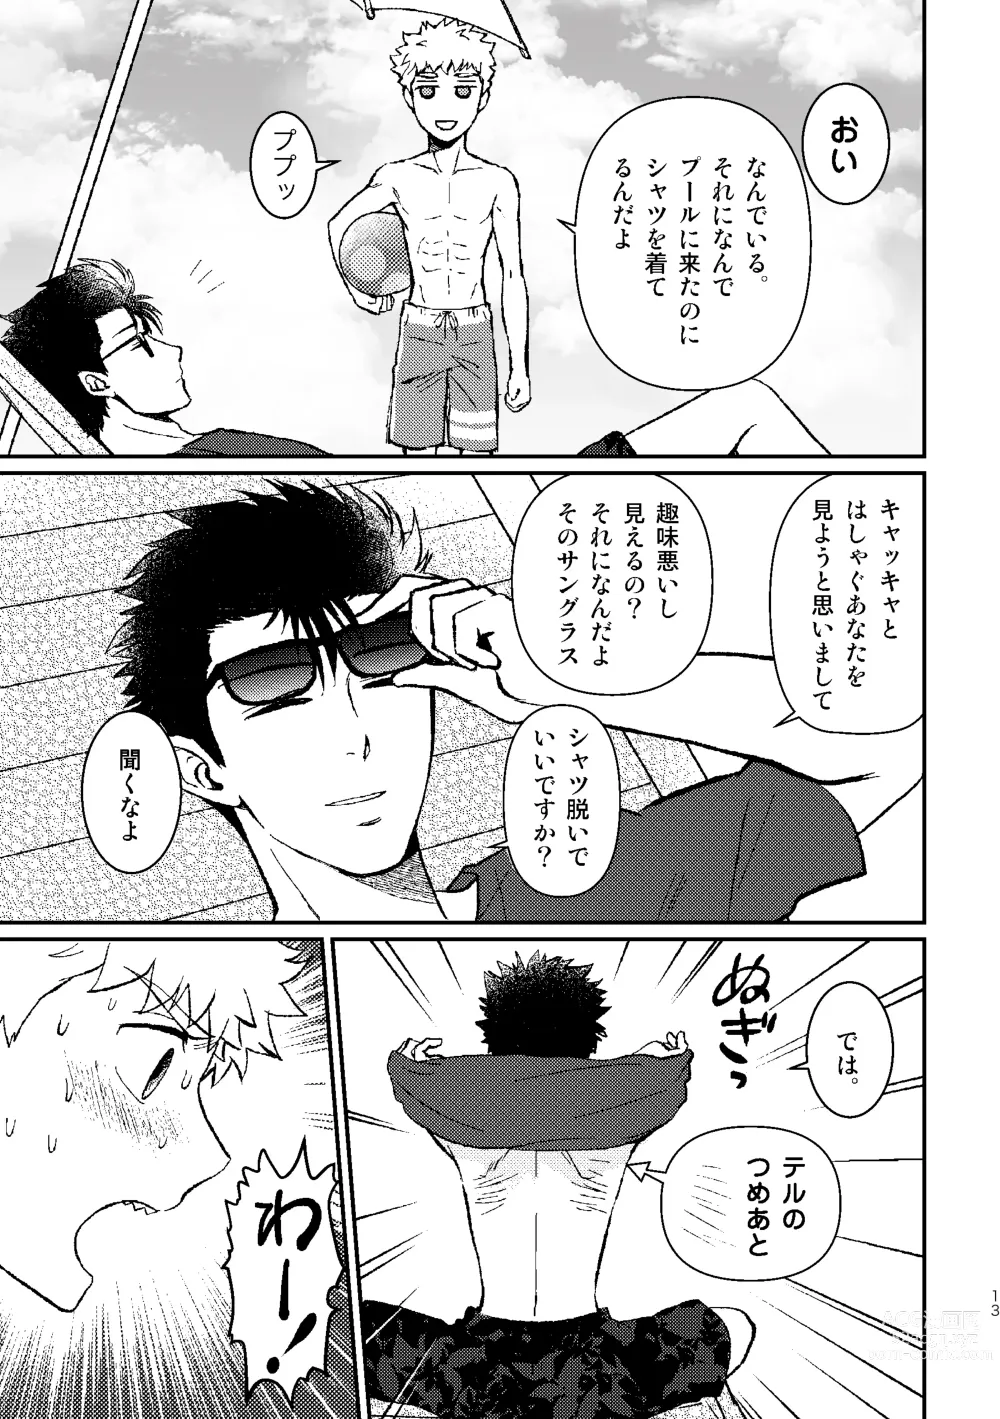 Page 15 of doujinshi SHIMAZAKI×TERUKI WEB LOG BOOK